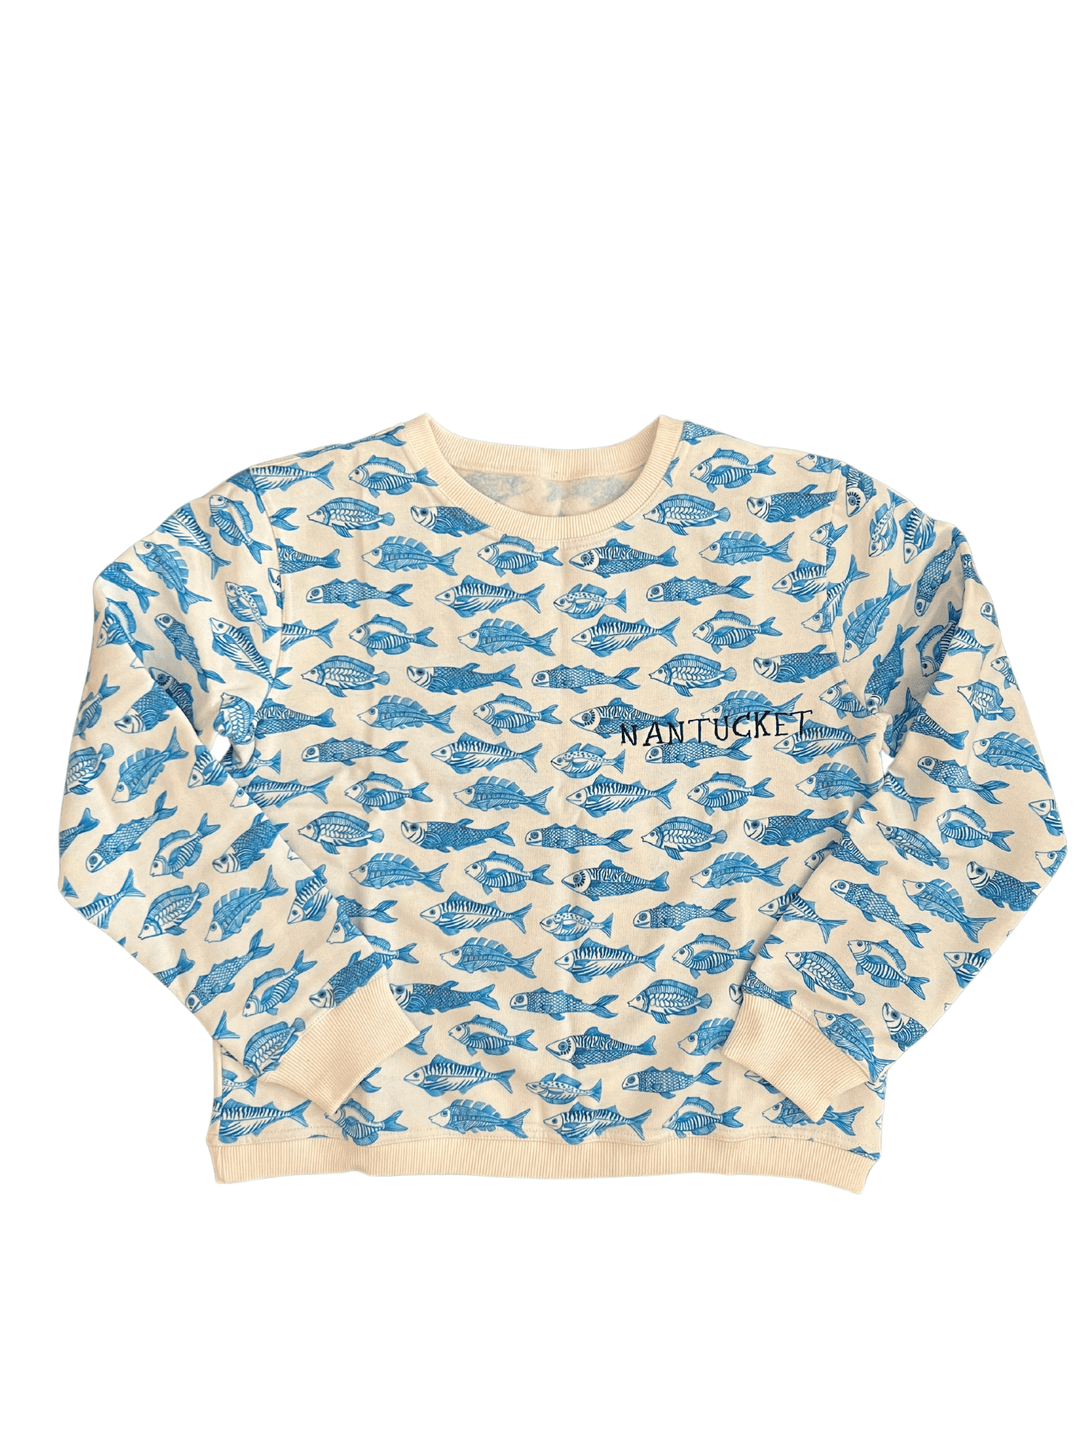 Beau & Ro Dress Small SAMPLE | Plenty Of Fish Nantucket Sweatshirt | Small